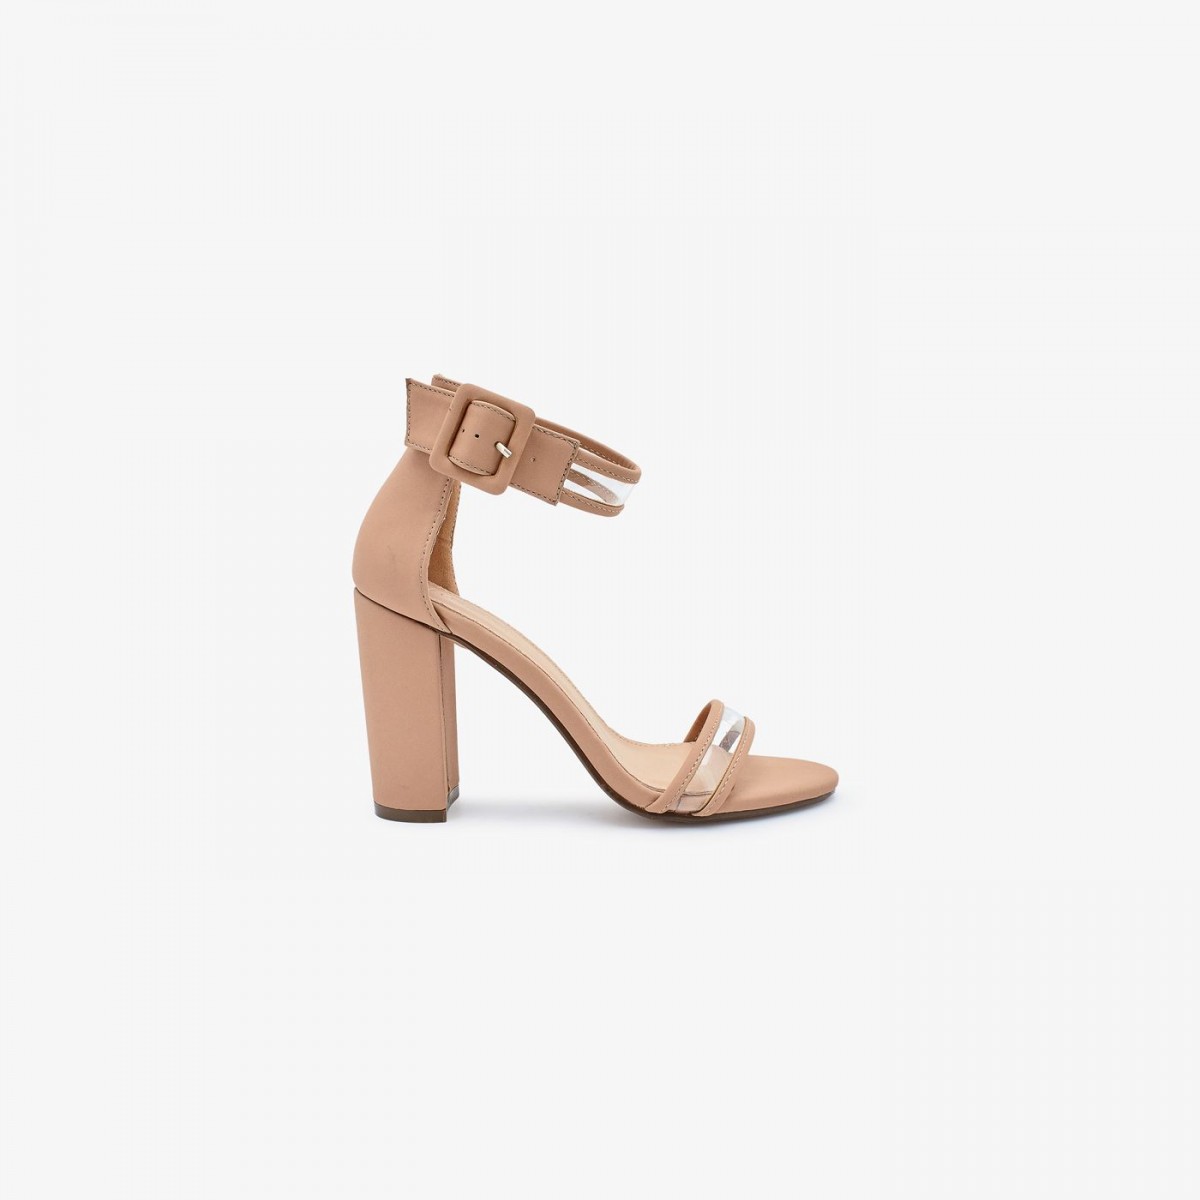 /2019/08/reeva-women-block-heels-rv-sd-0465-nude-image2.jpeg